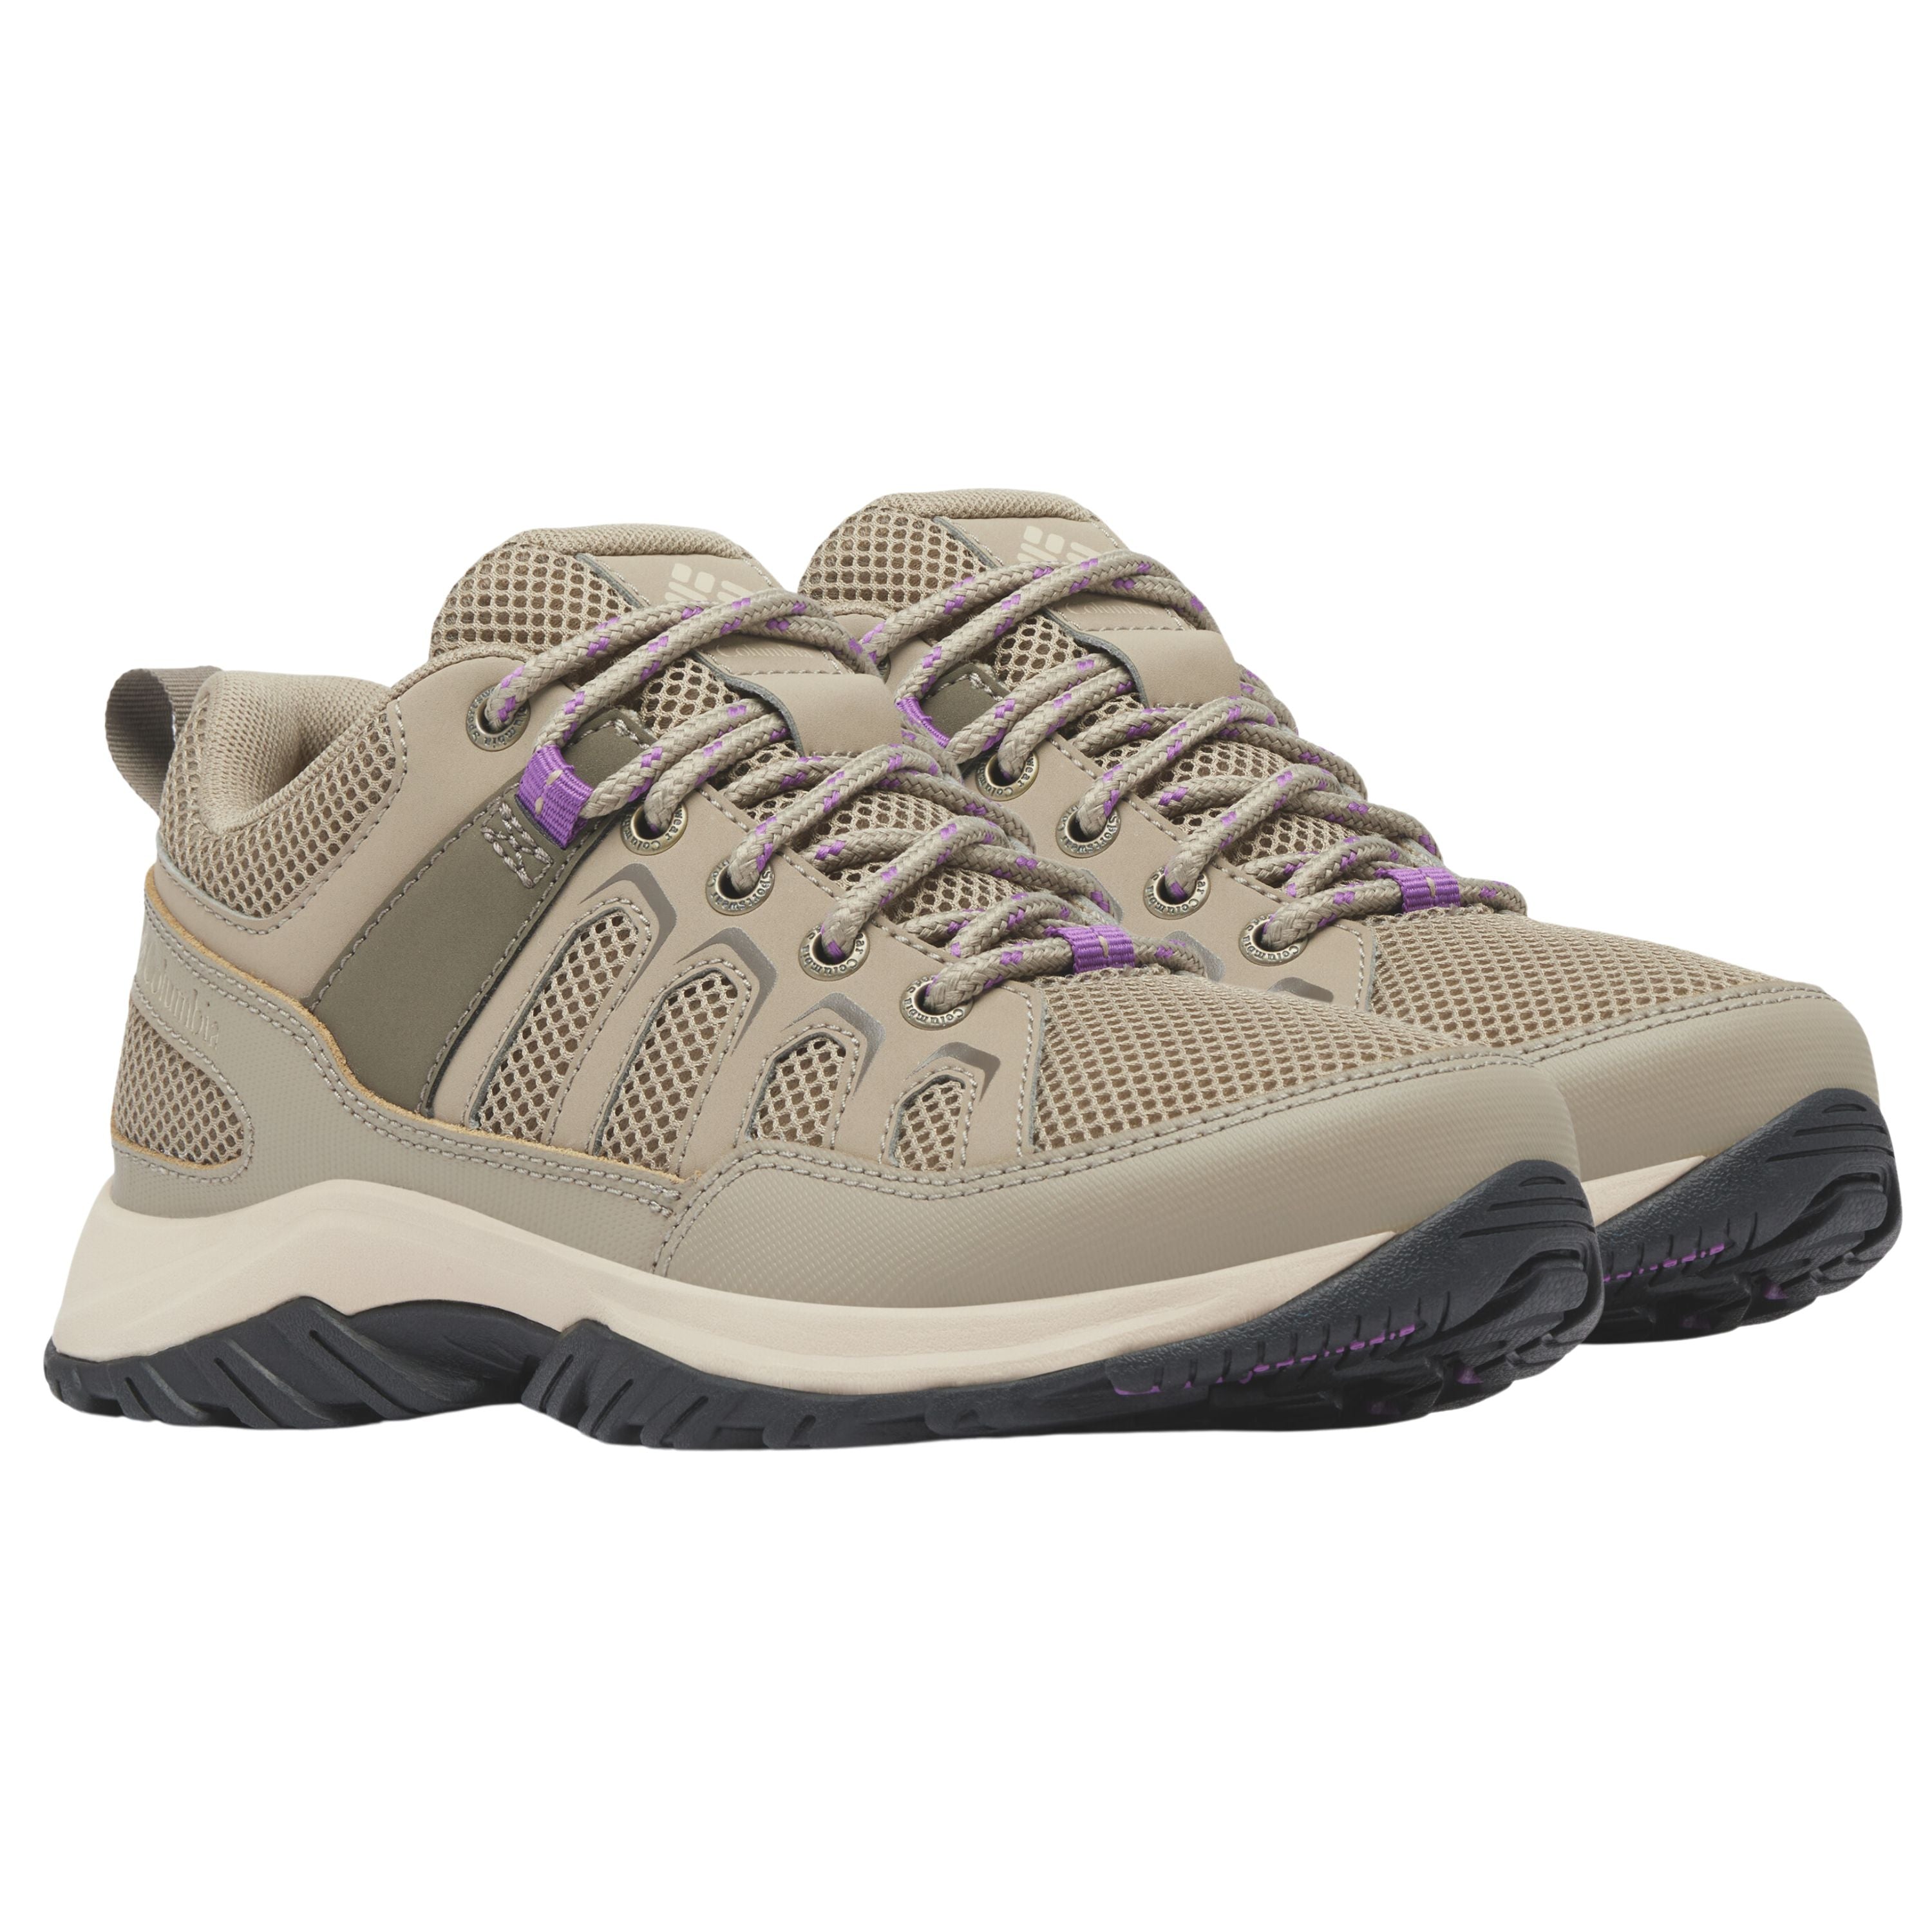 "Granite Trail" Hiking shoes - Women's